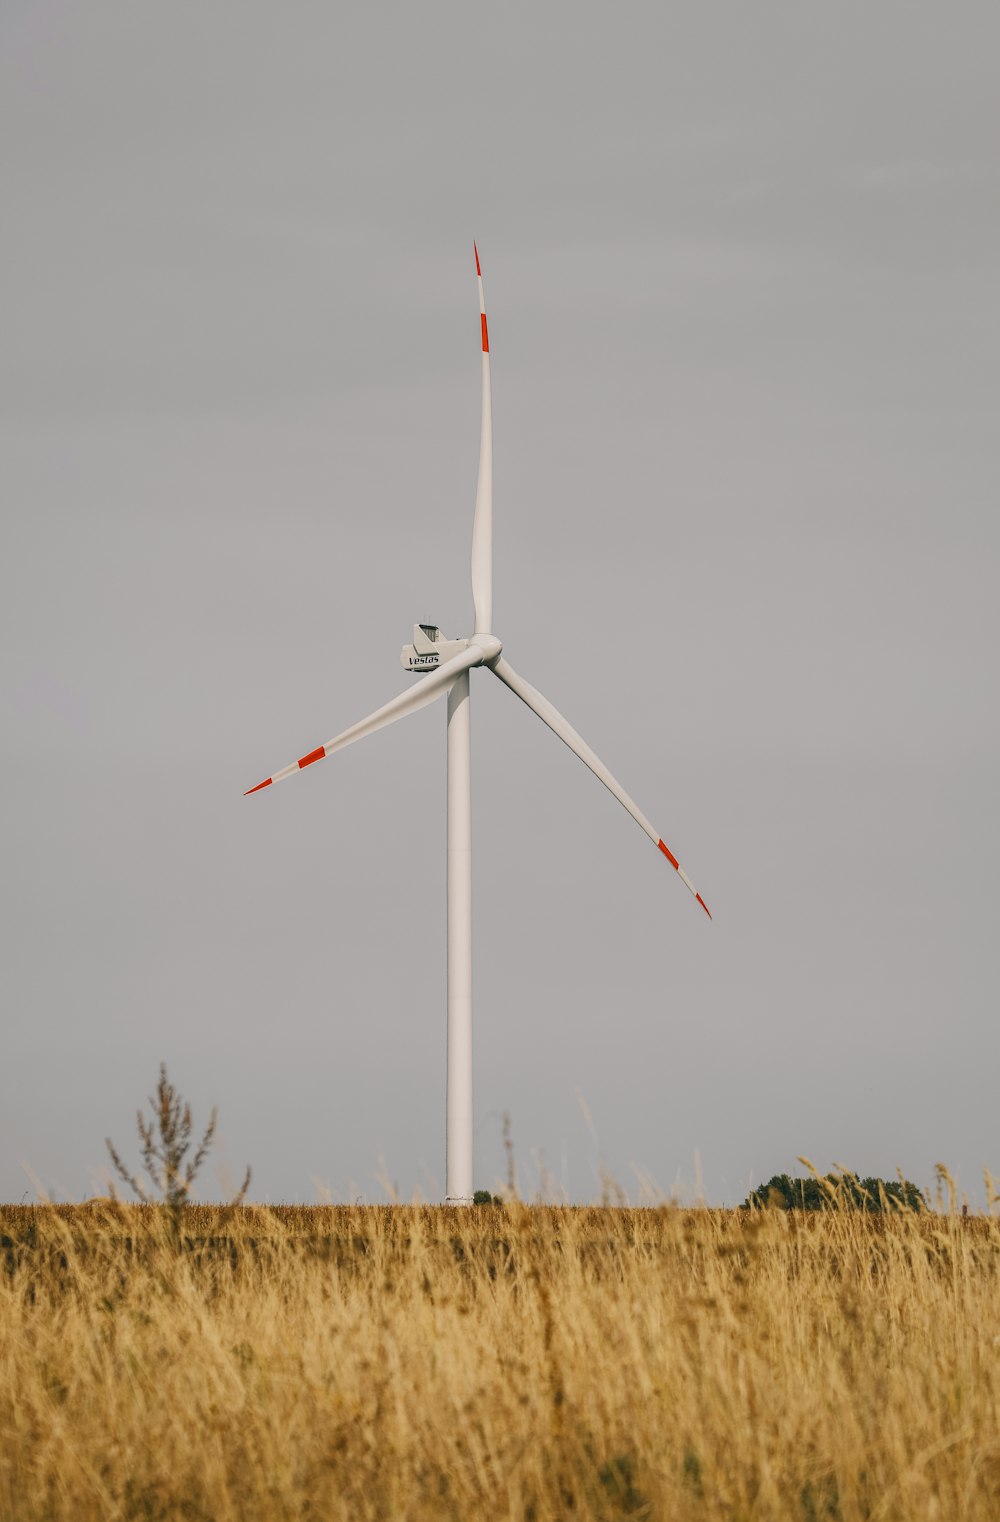 white wind turbine on brown grass field under gray cloudy sky